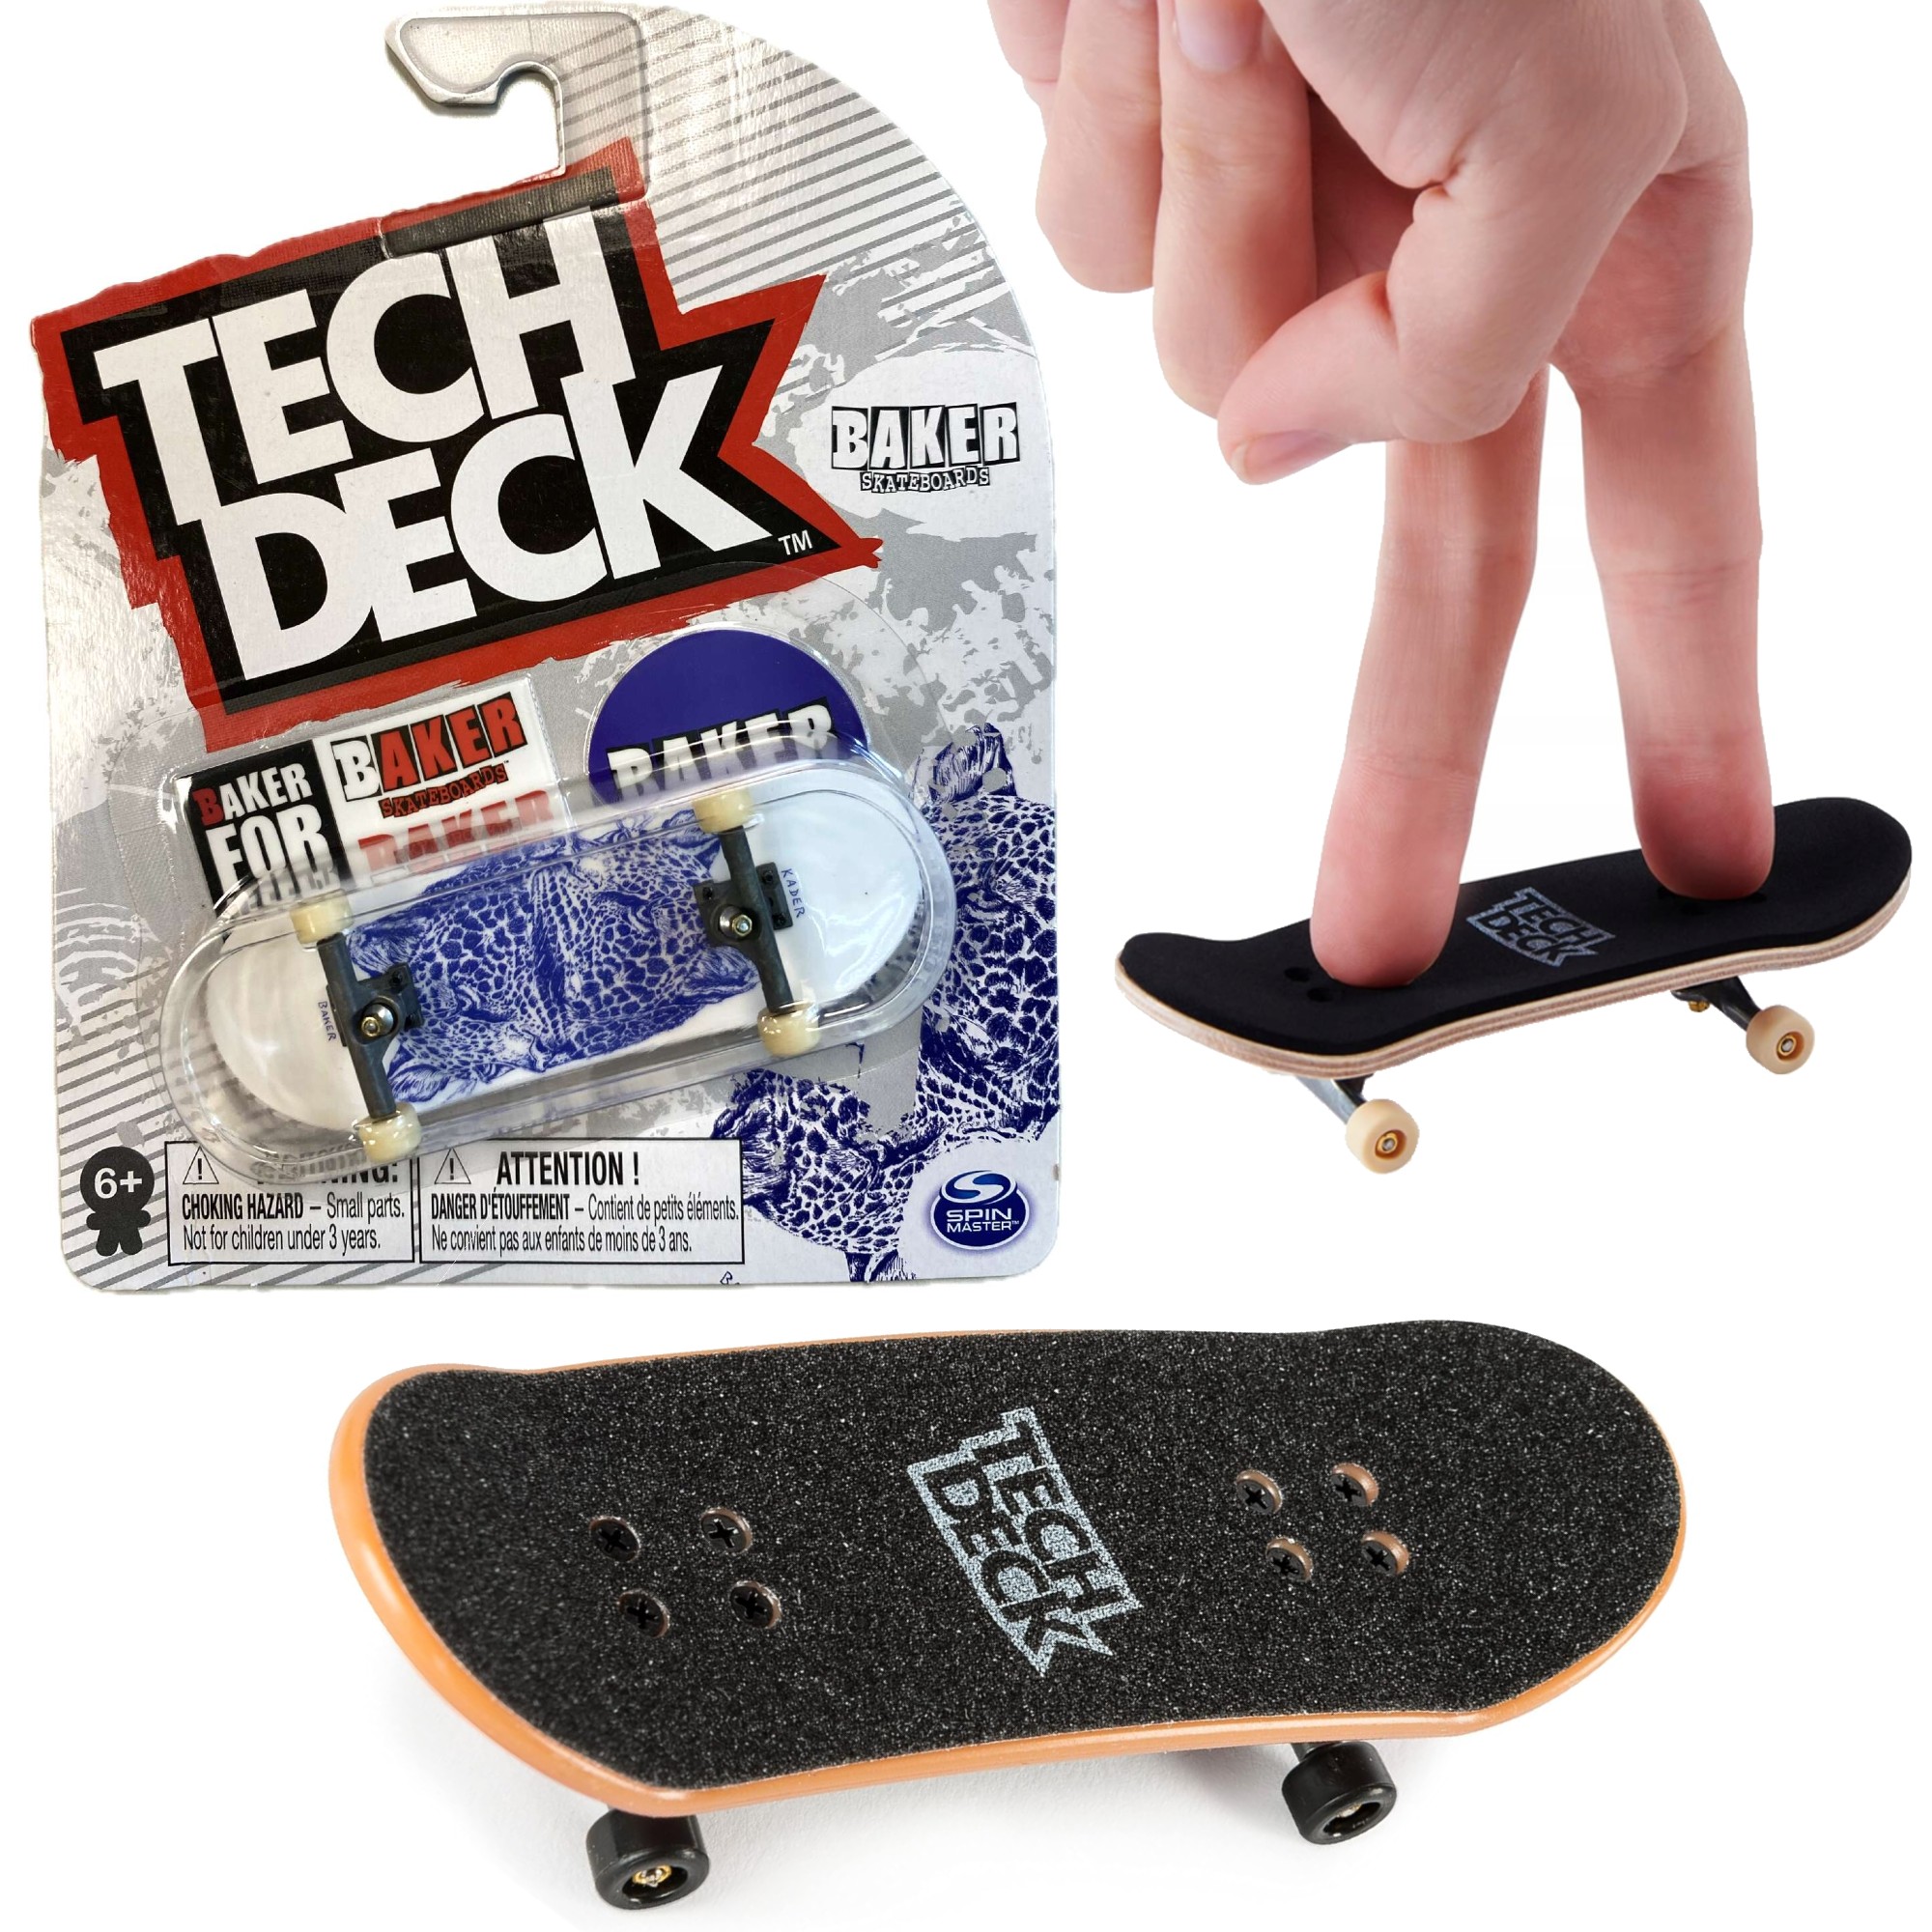 Tech Deck deskorolka fingerboard Baker Kader Pantera + naklejki